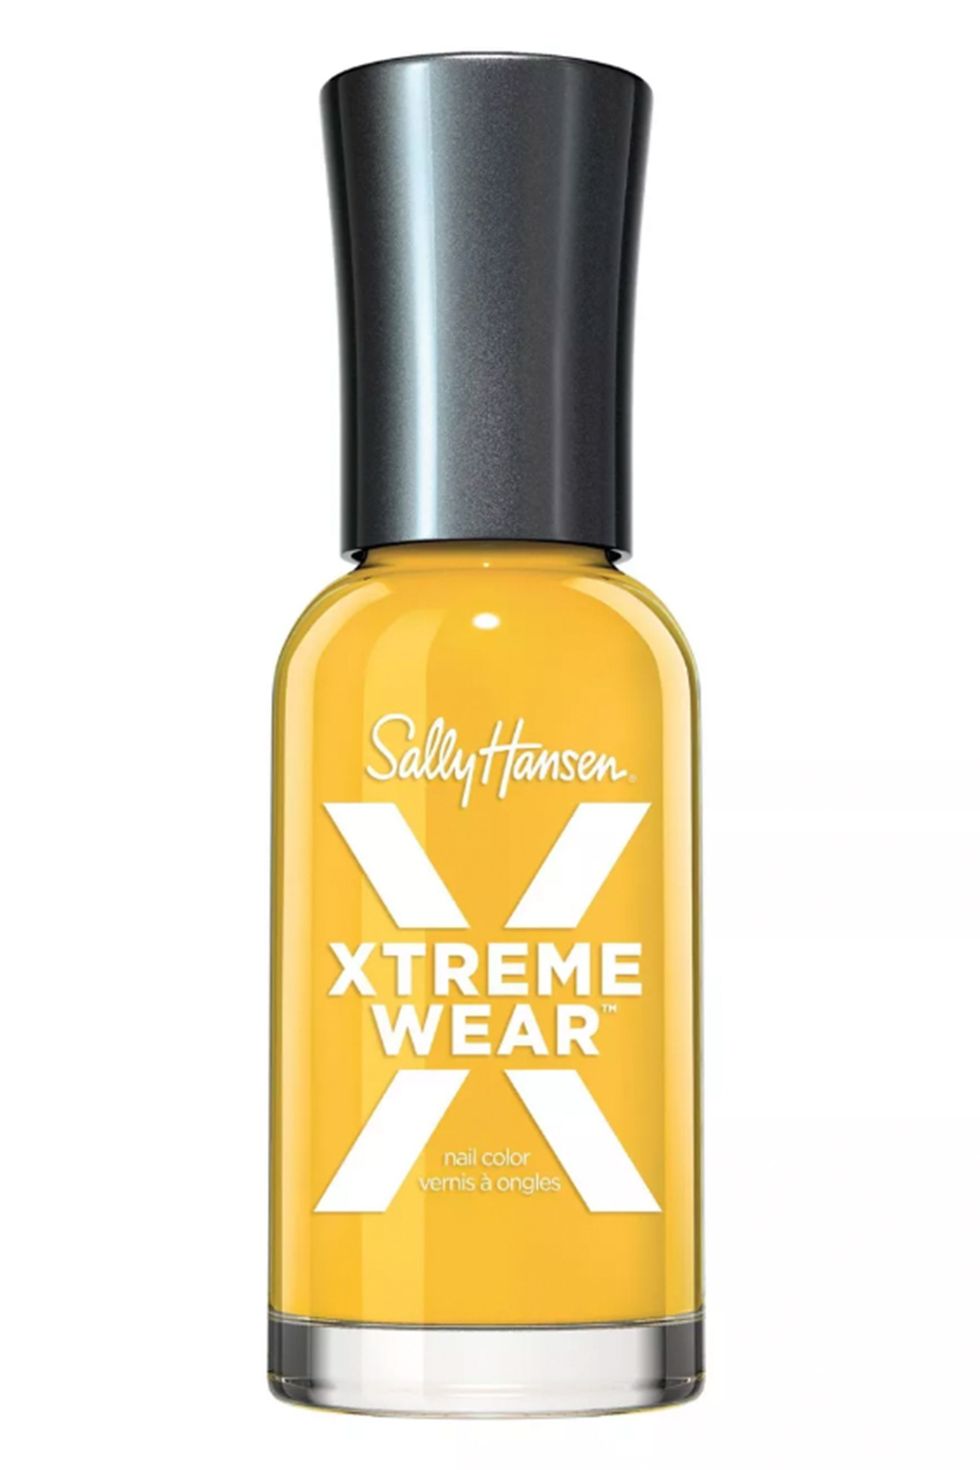 Xtreme Wear Nail Polish in Mellow Yellow